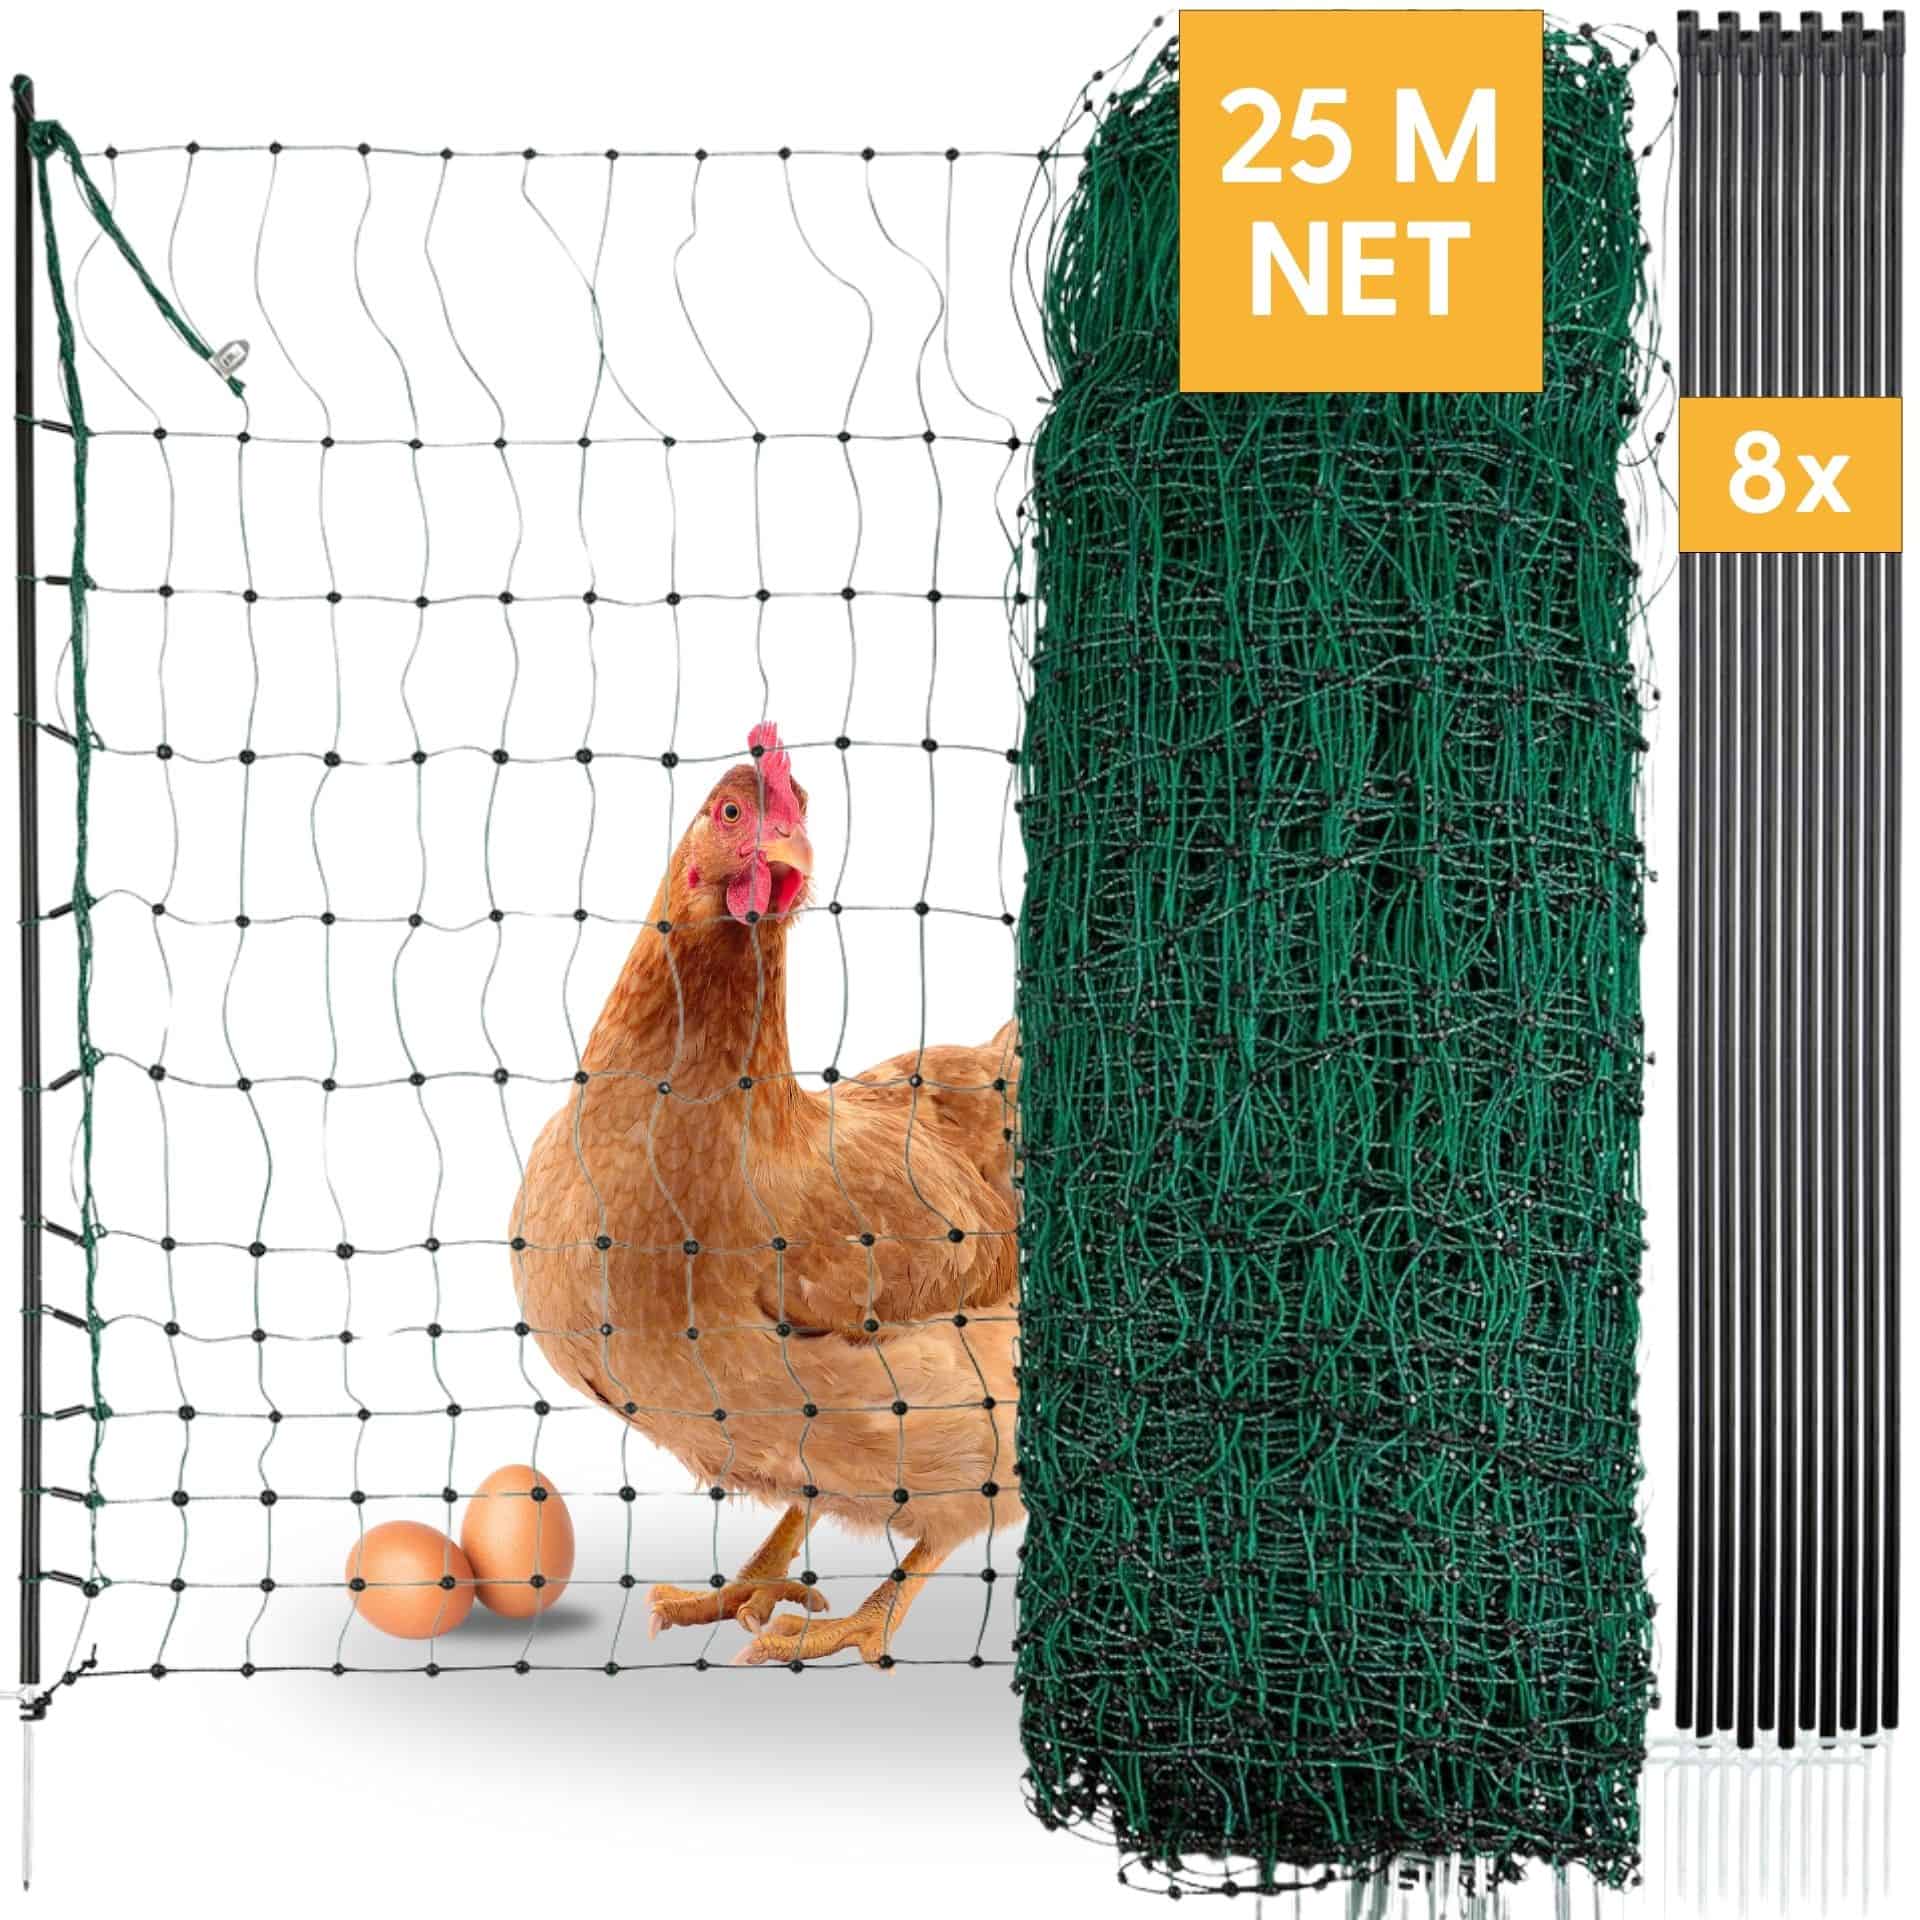 Agrarzone poultry net 25m x112 cm